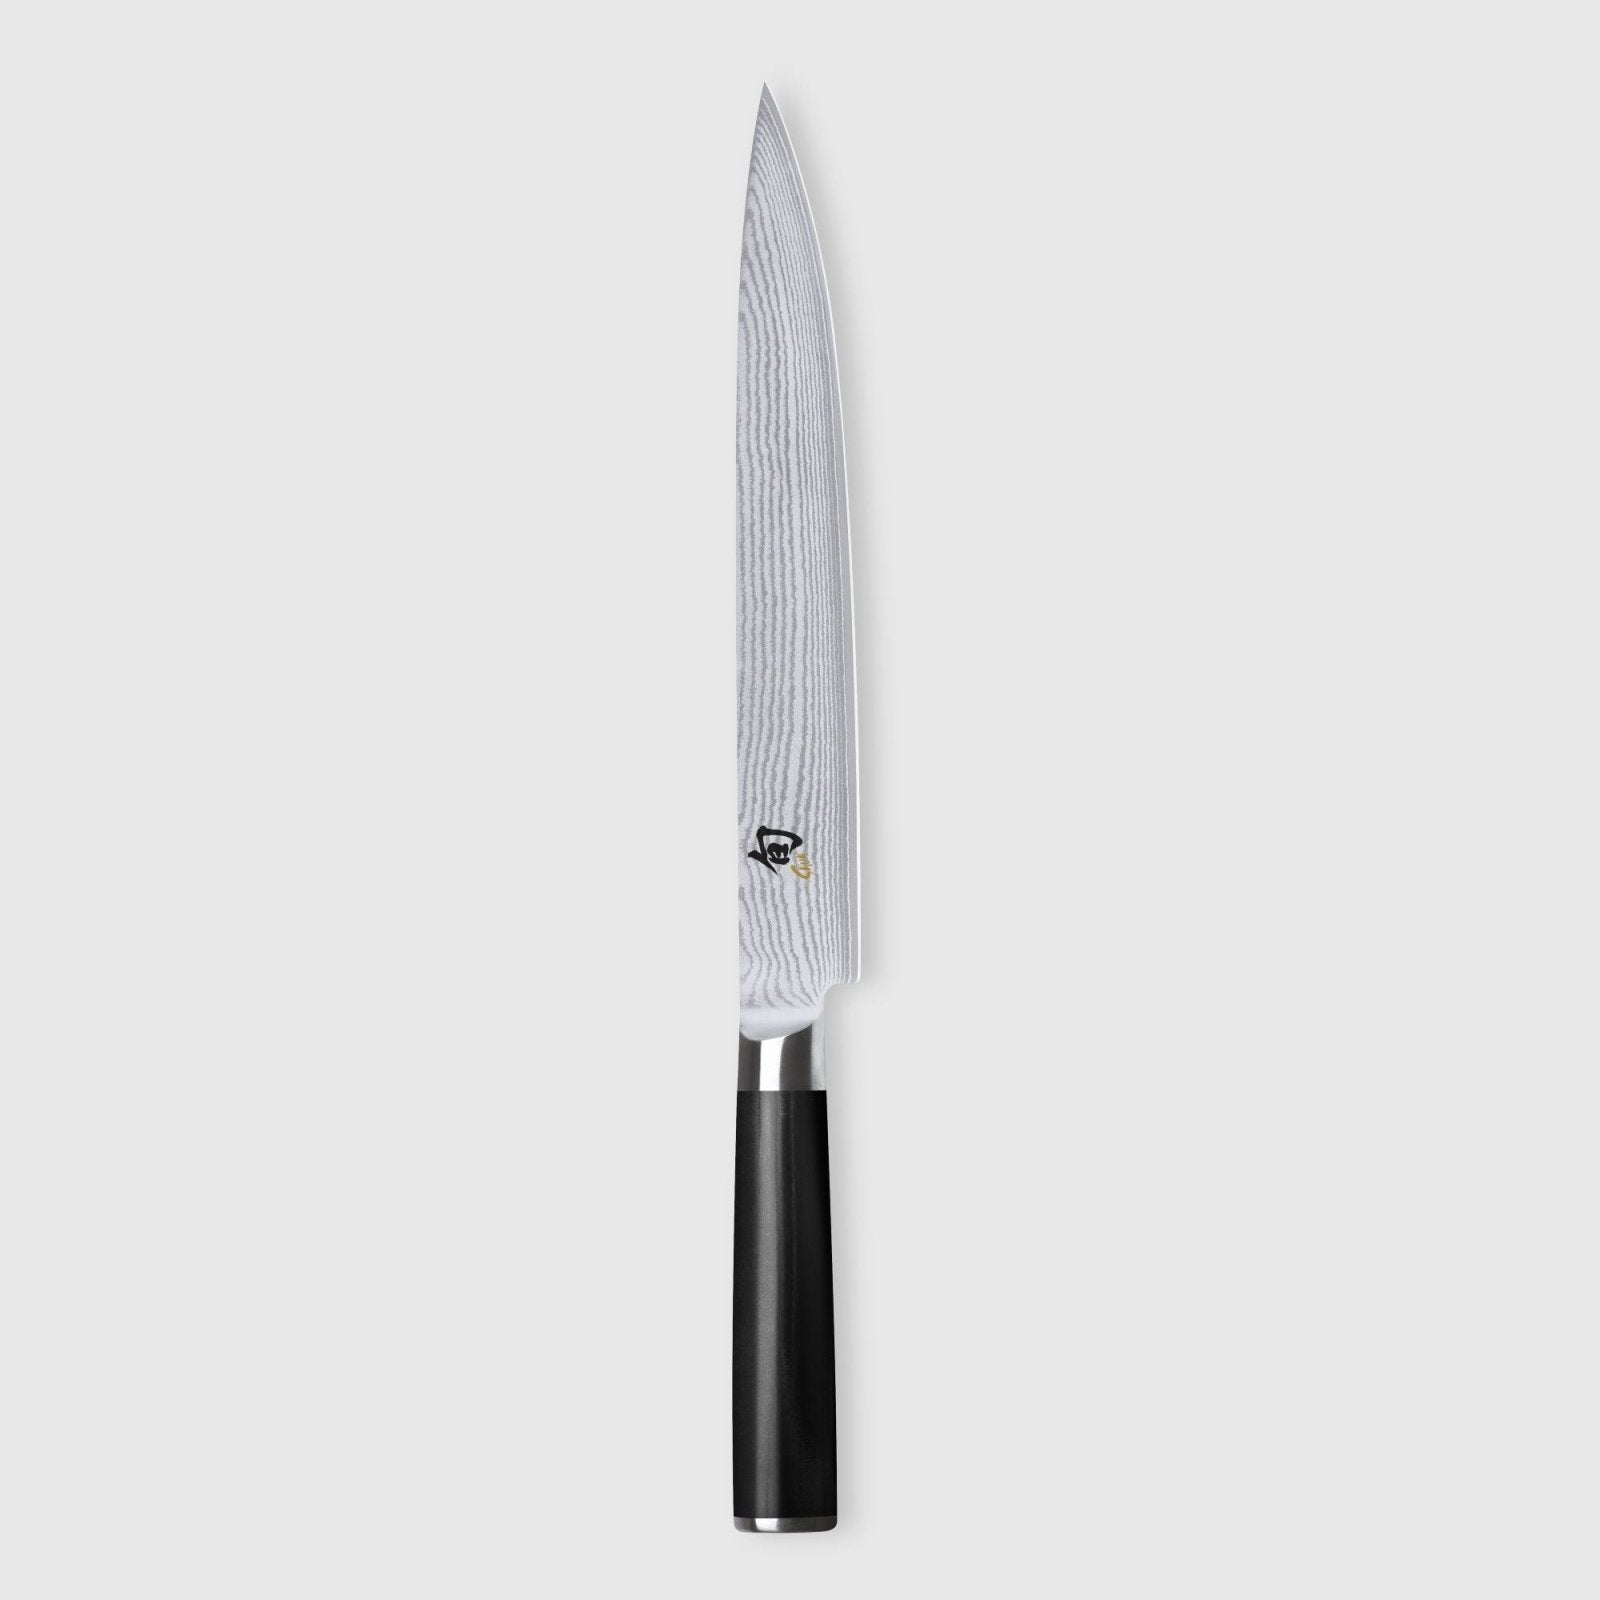 KAI Shun 23cm Slicing Knife - KAI-DM-0704 - The Cotswold Knife Company